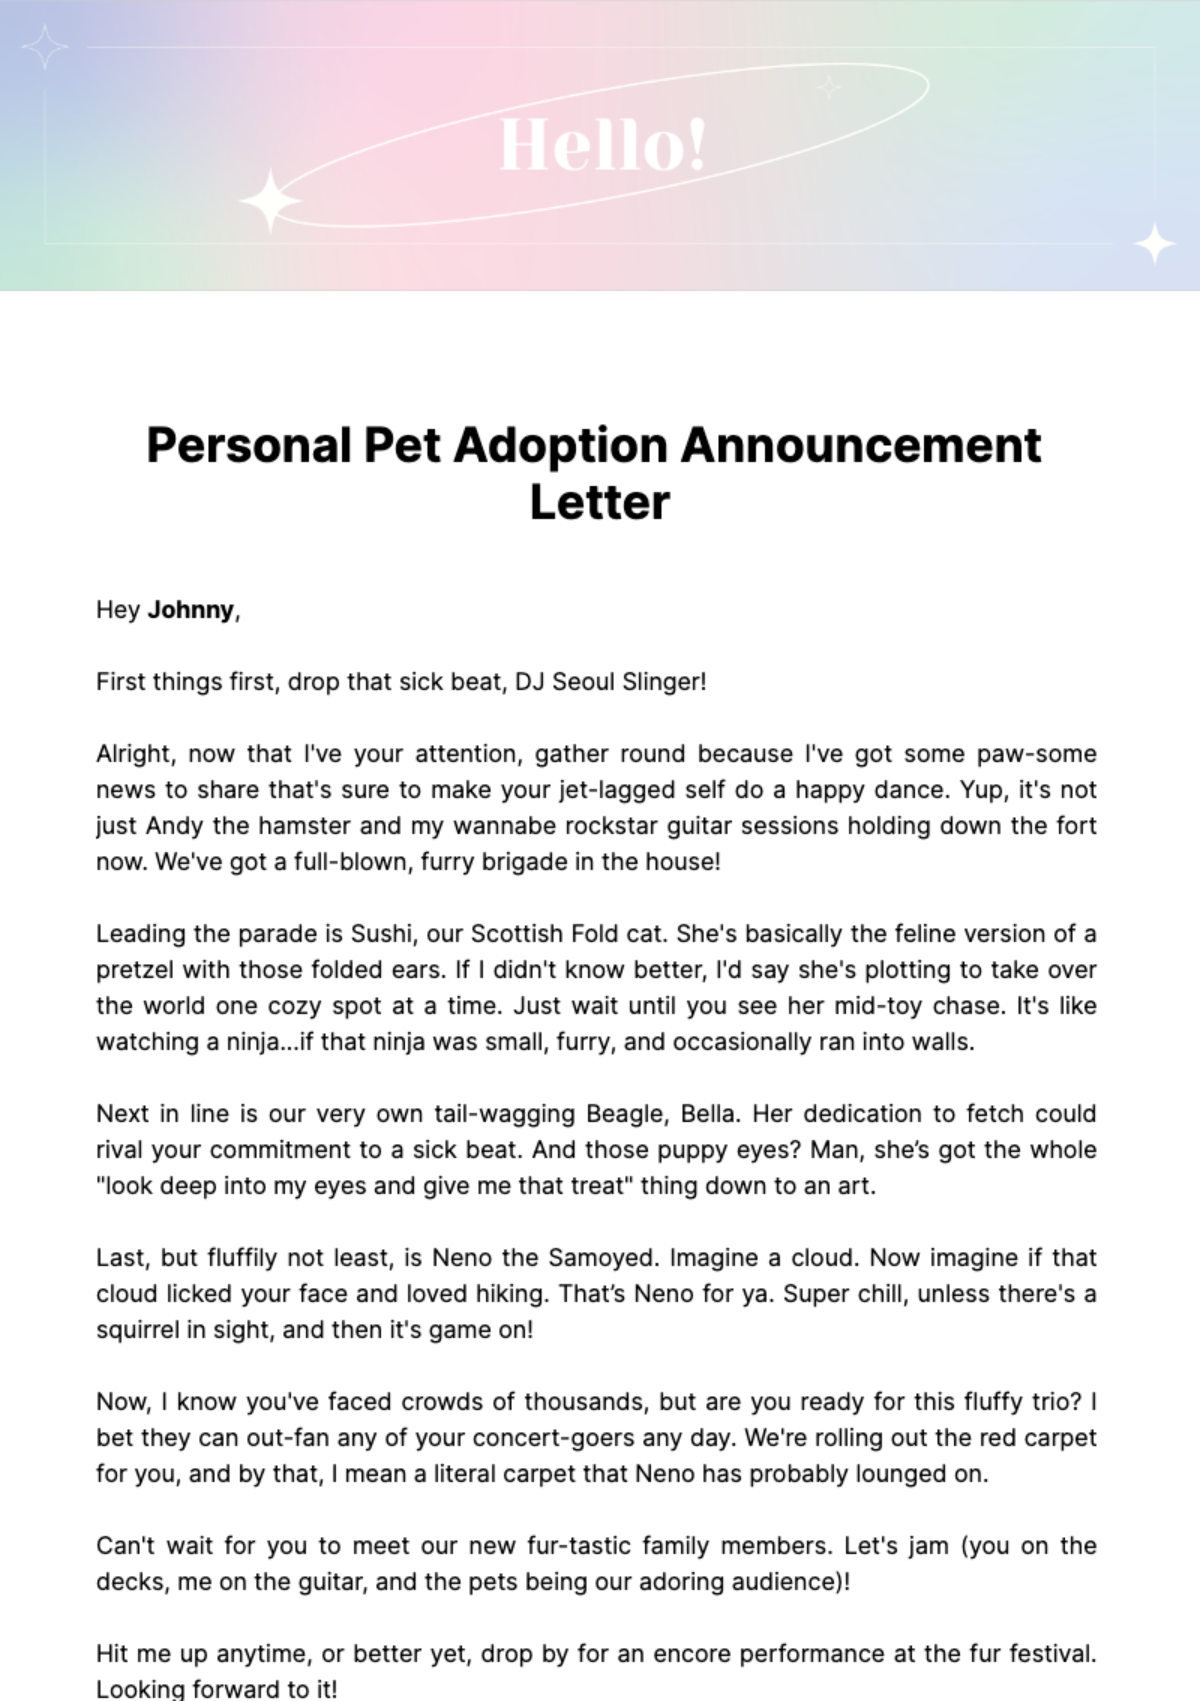 Personal Pet Adoption Announcement Letter Template